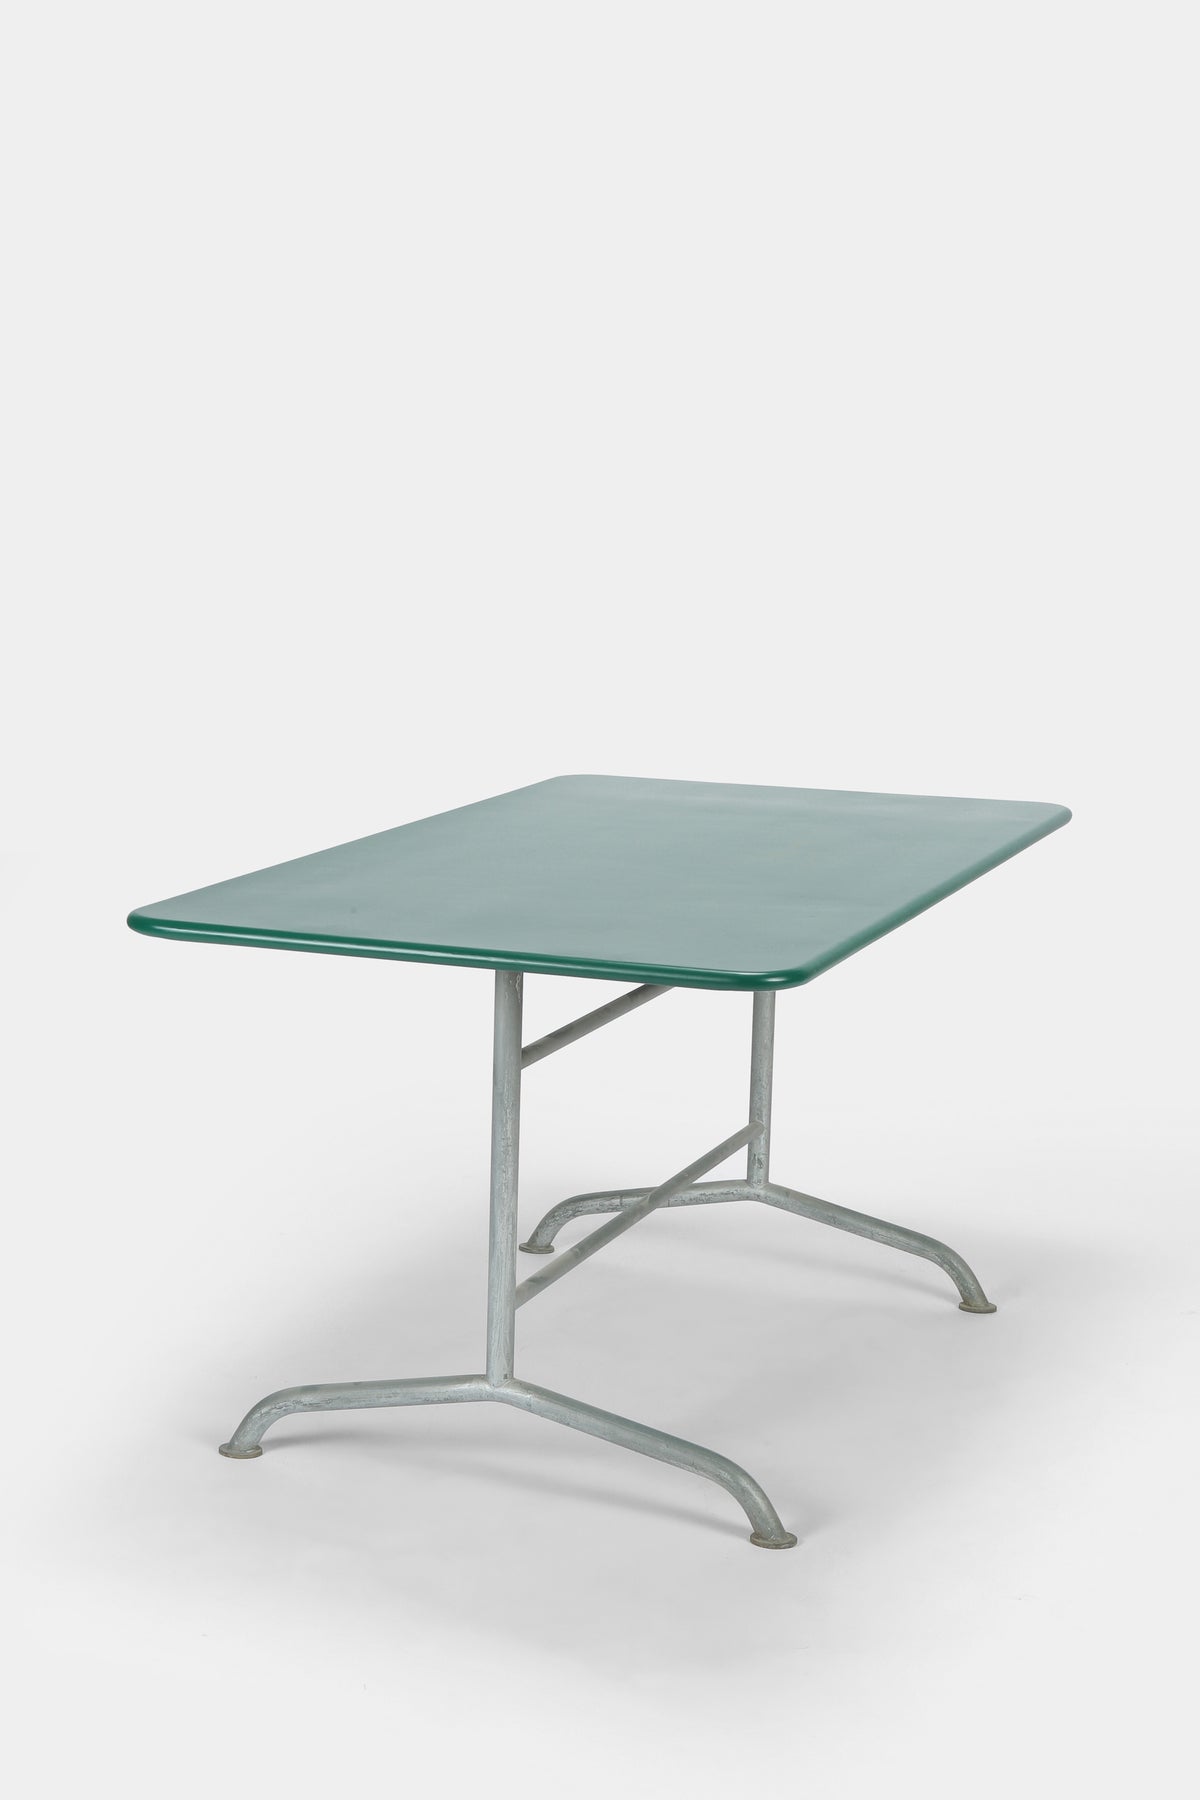 Embru garden table factory design 30er